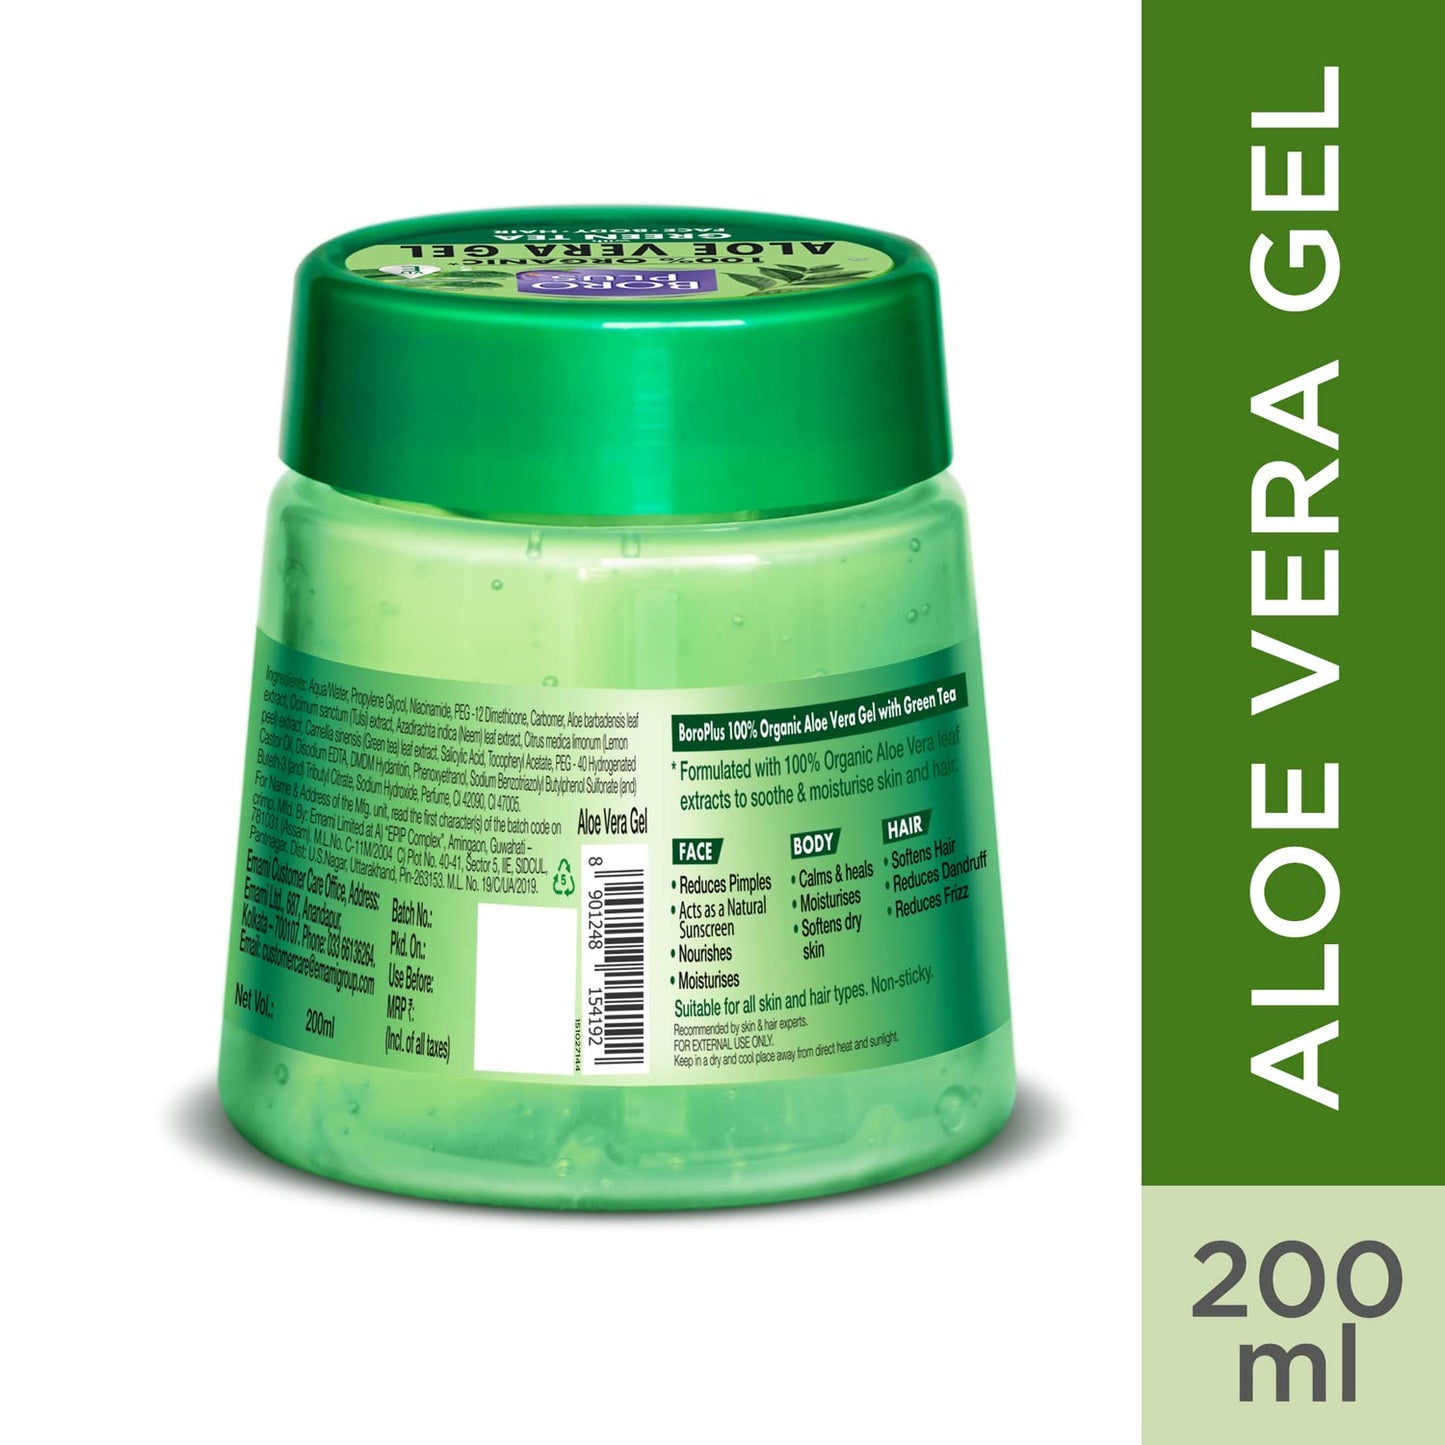 Boroplus Aloevera Gel With Green Tea For Skin And Hair 200ml